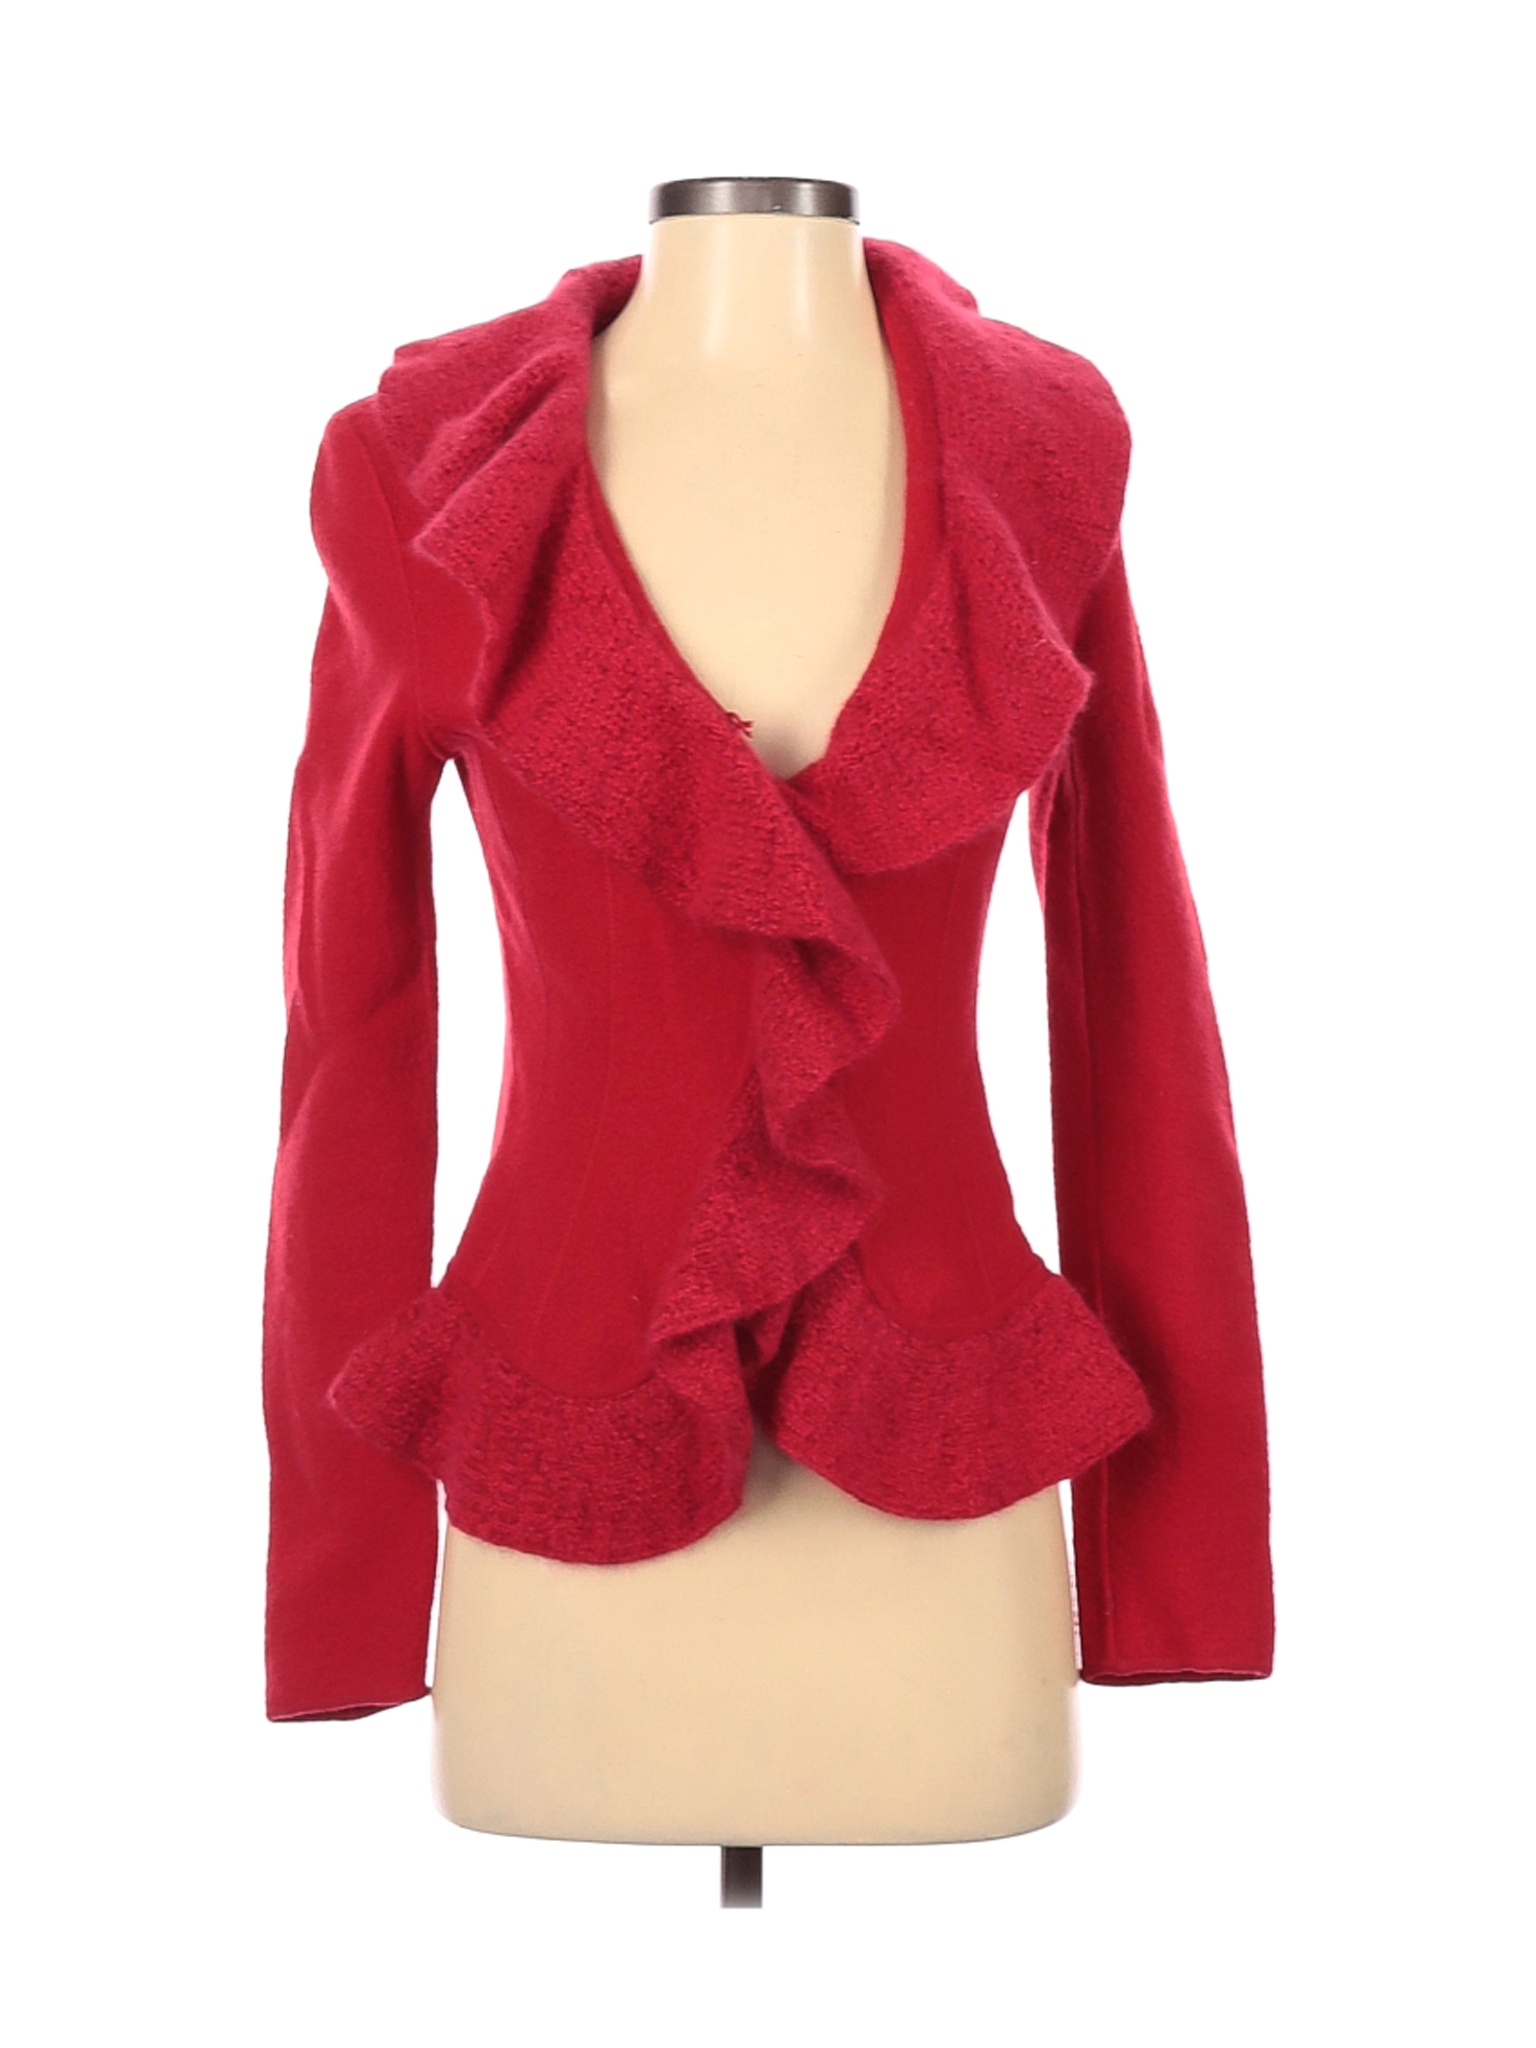 Armani Collezioni Women Red Jacket 4 | eBay